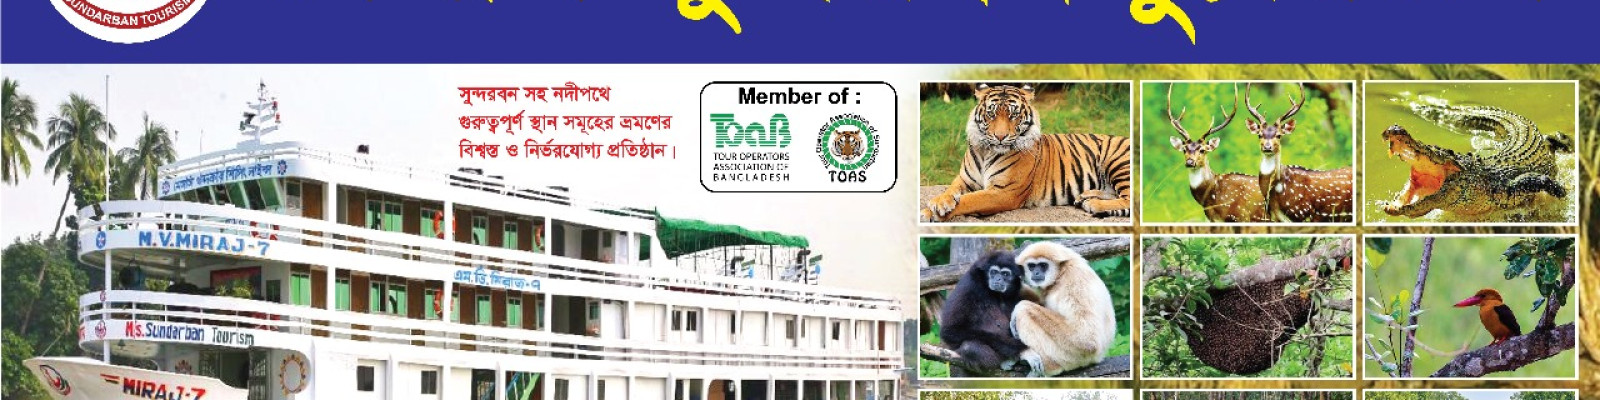 Cover image of M/S Sundarban Tourism